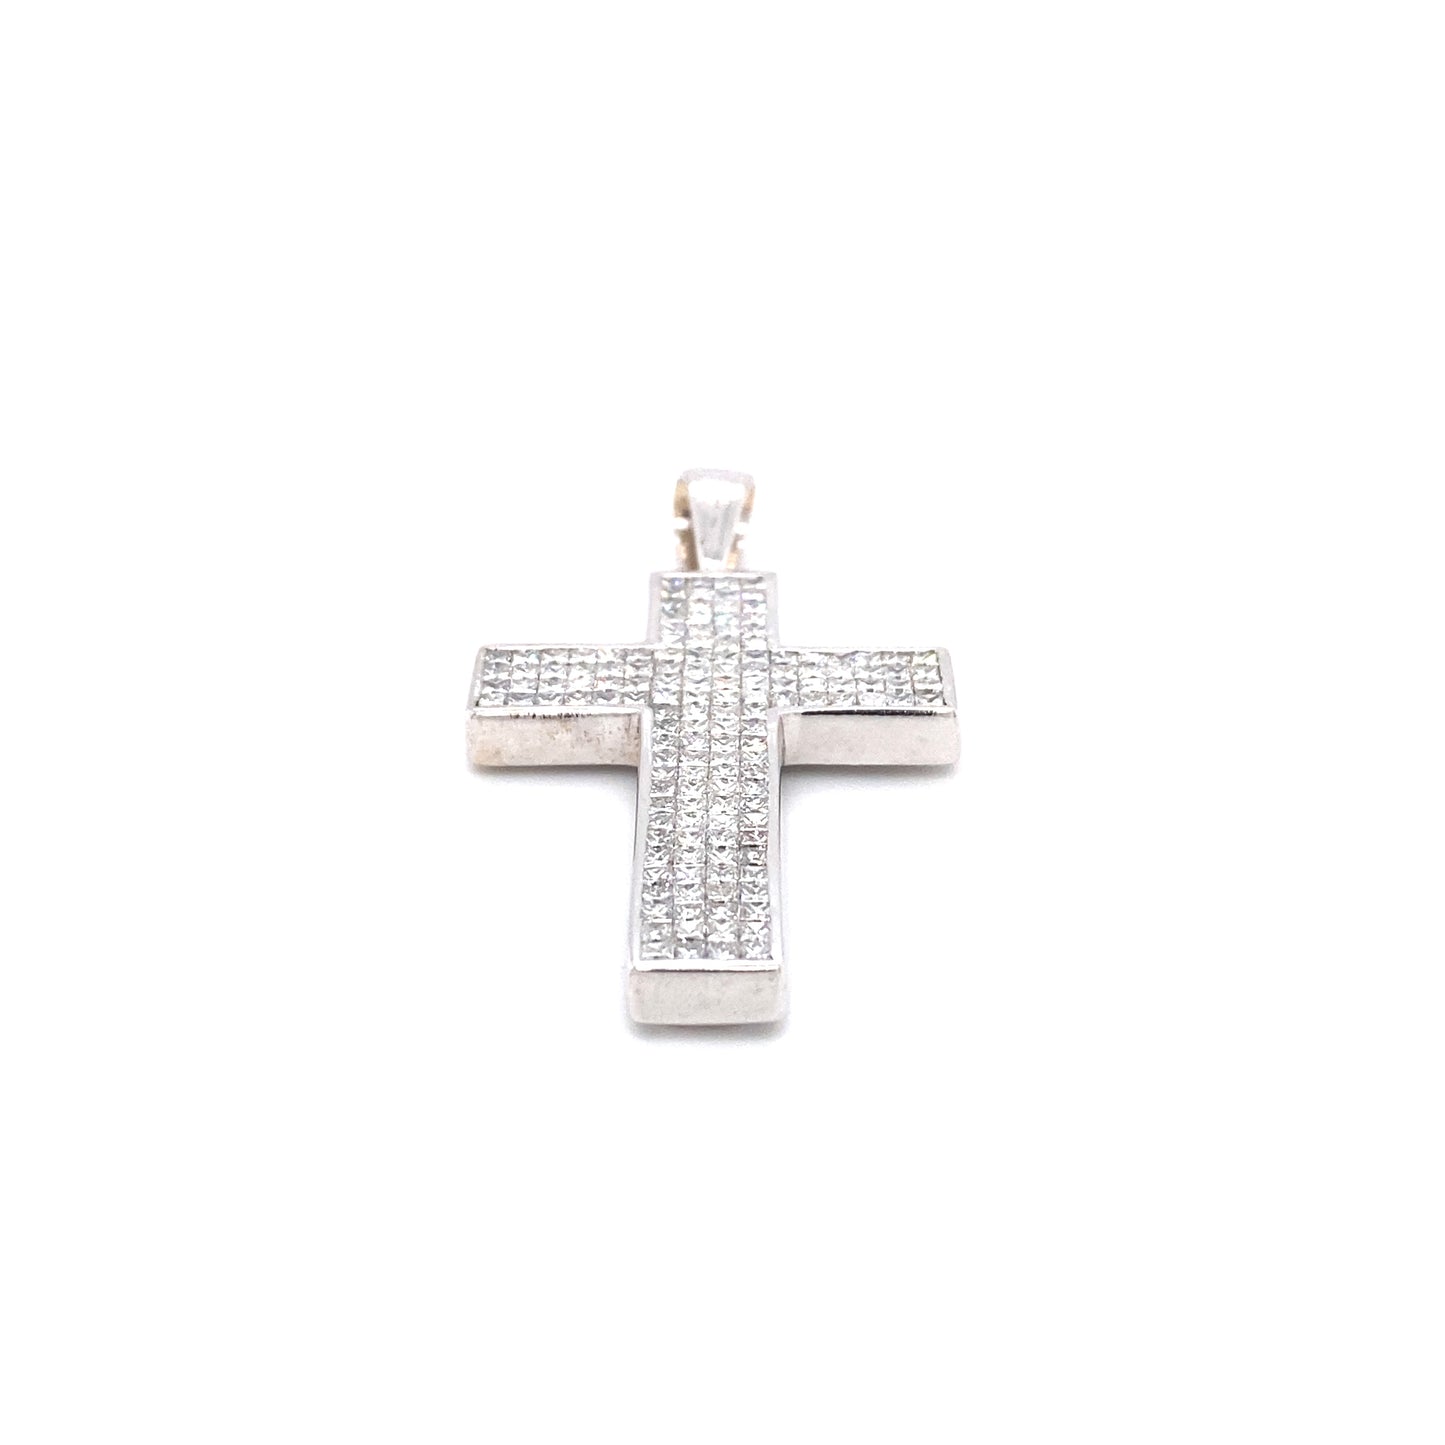 Vintage 5.0ct Diamond Cross Pendant in 18K White Gold